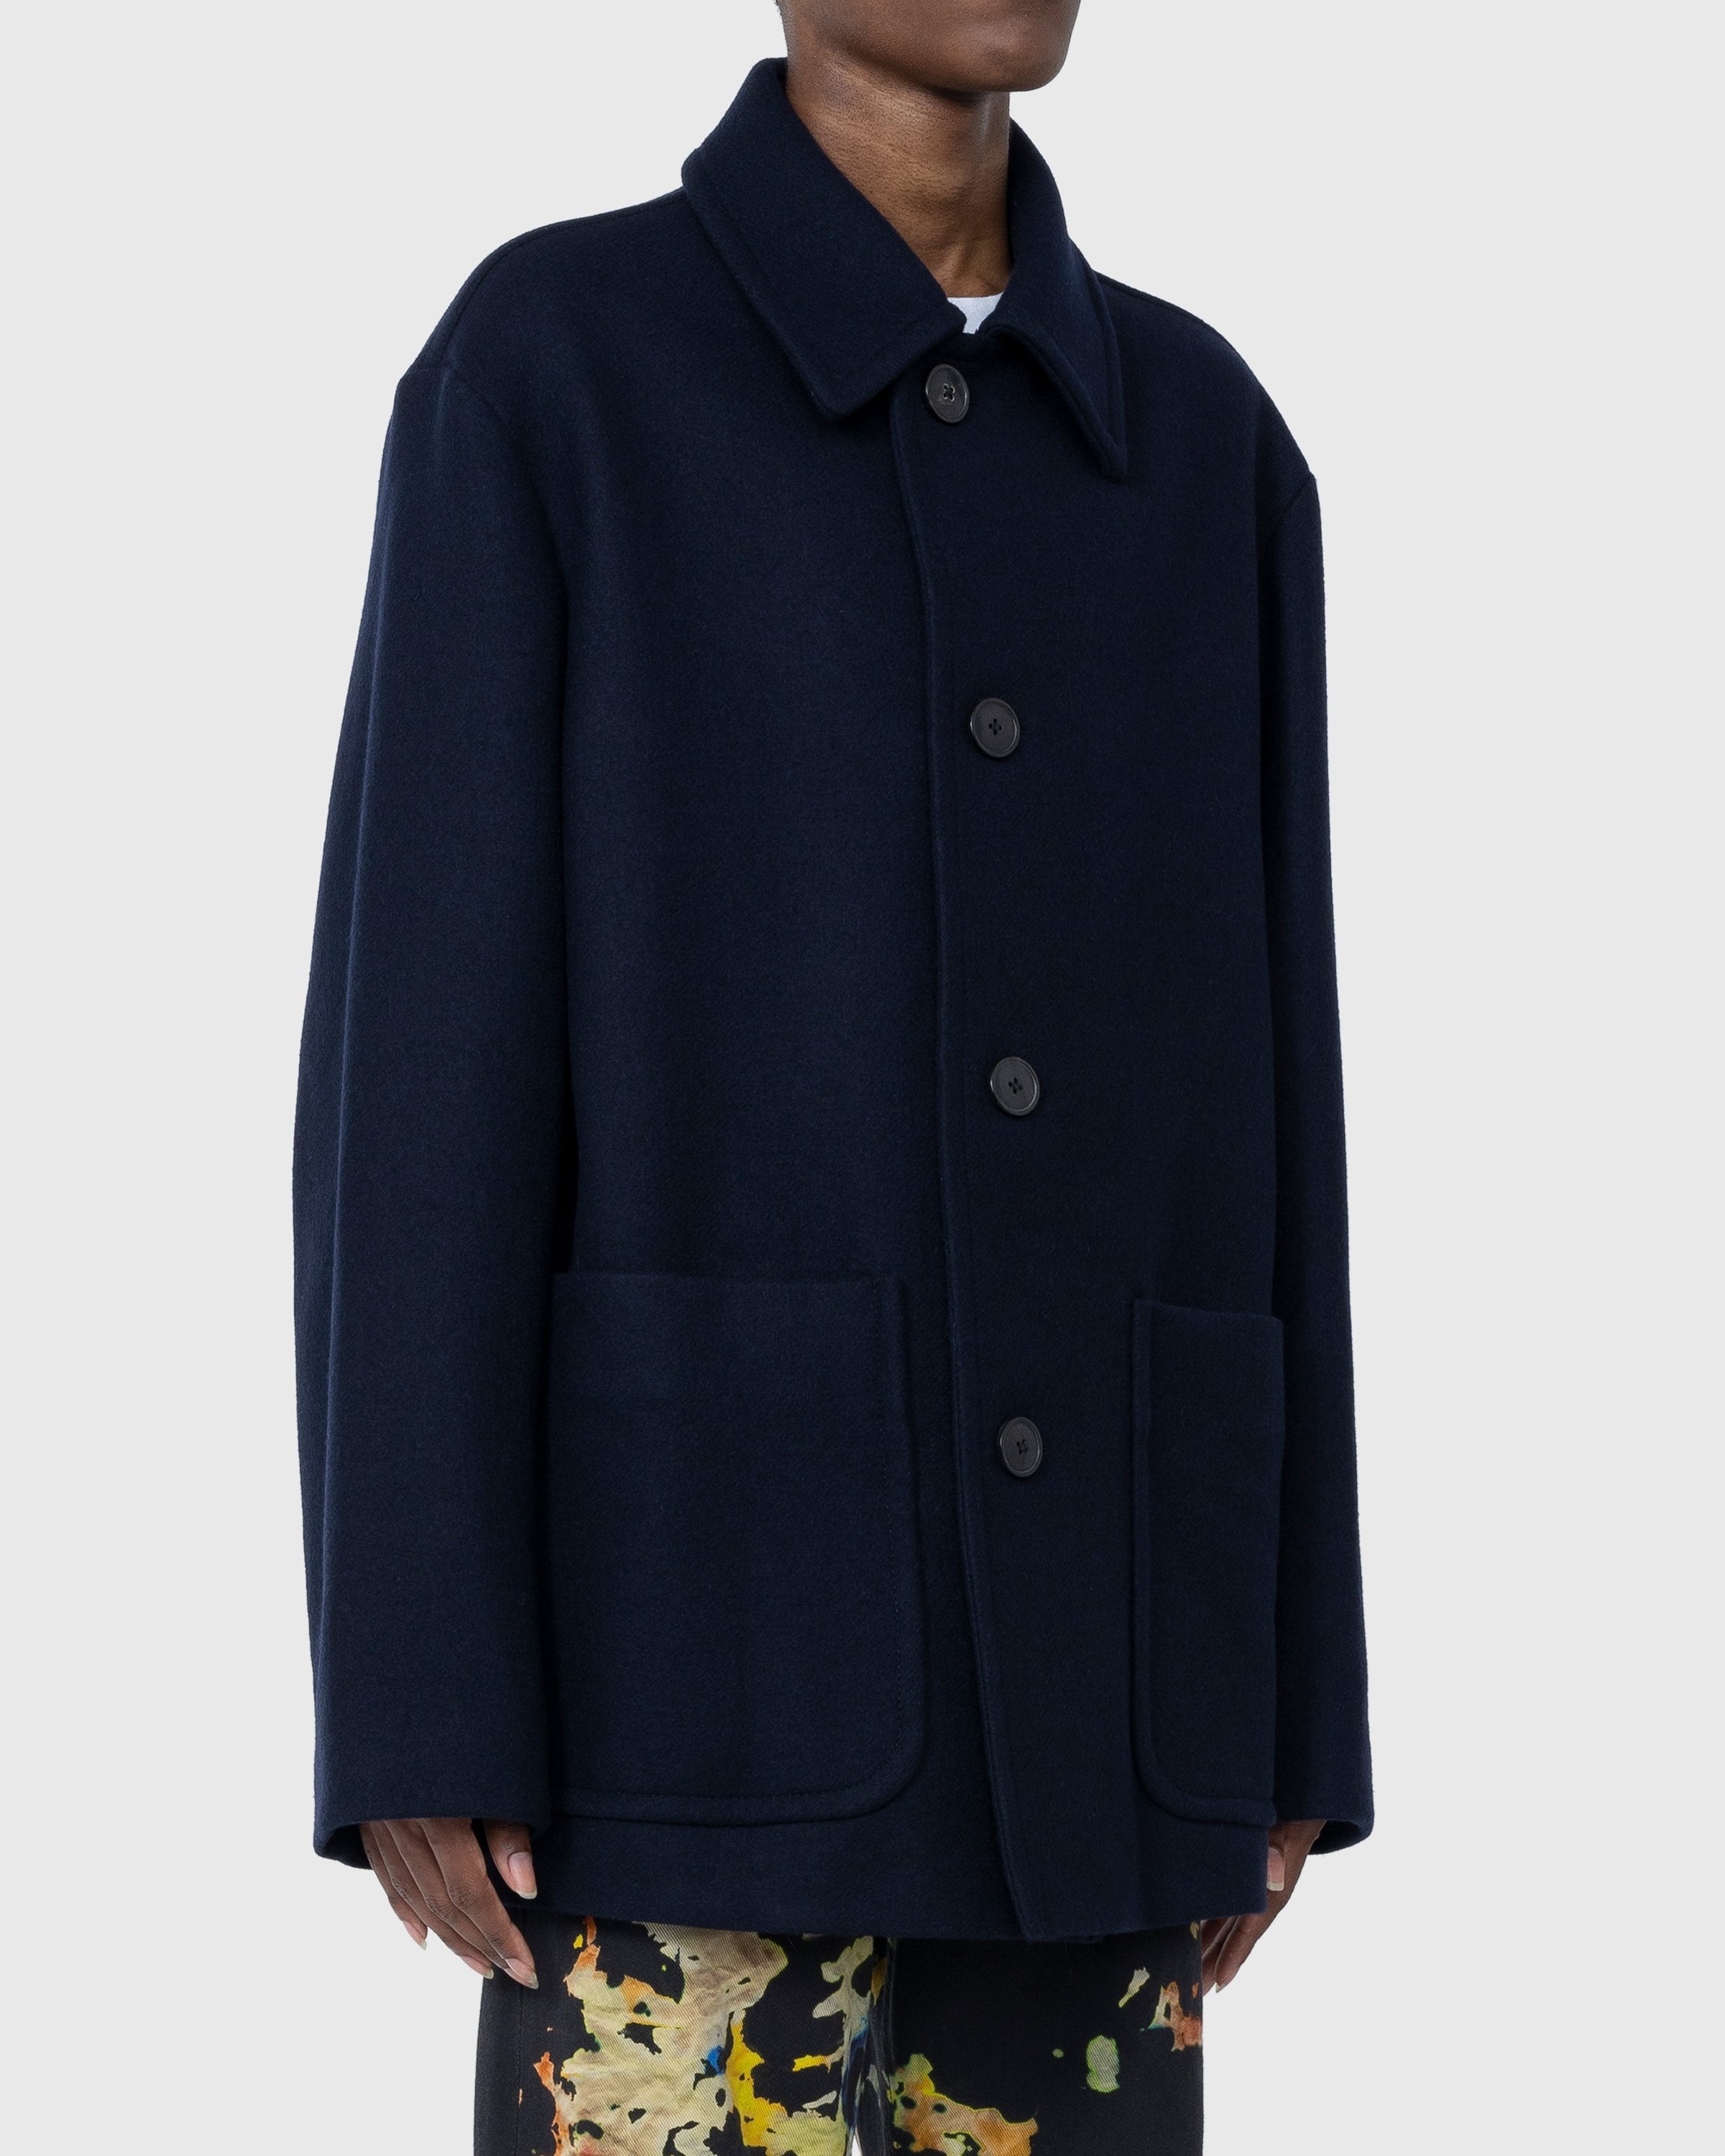 Dries van Noten – Ronnor Workwear Jacket Navy - Jackets - Blue - Image 3